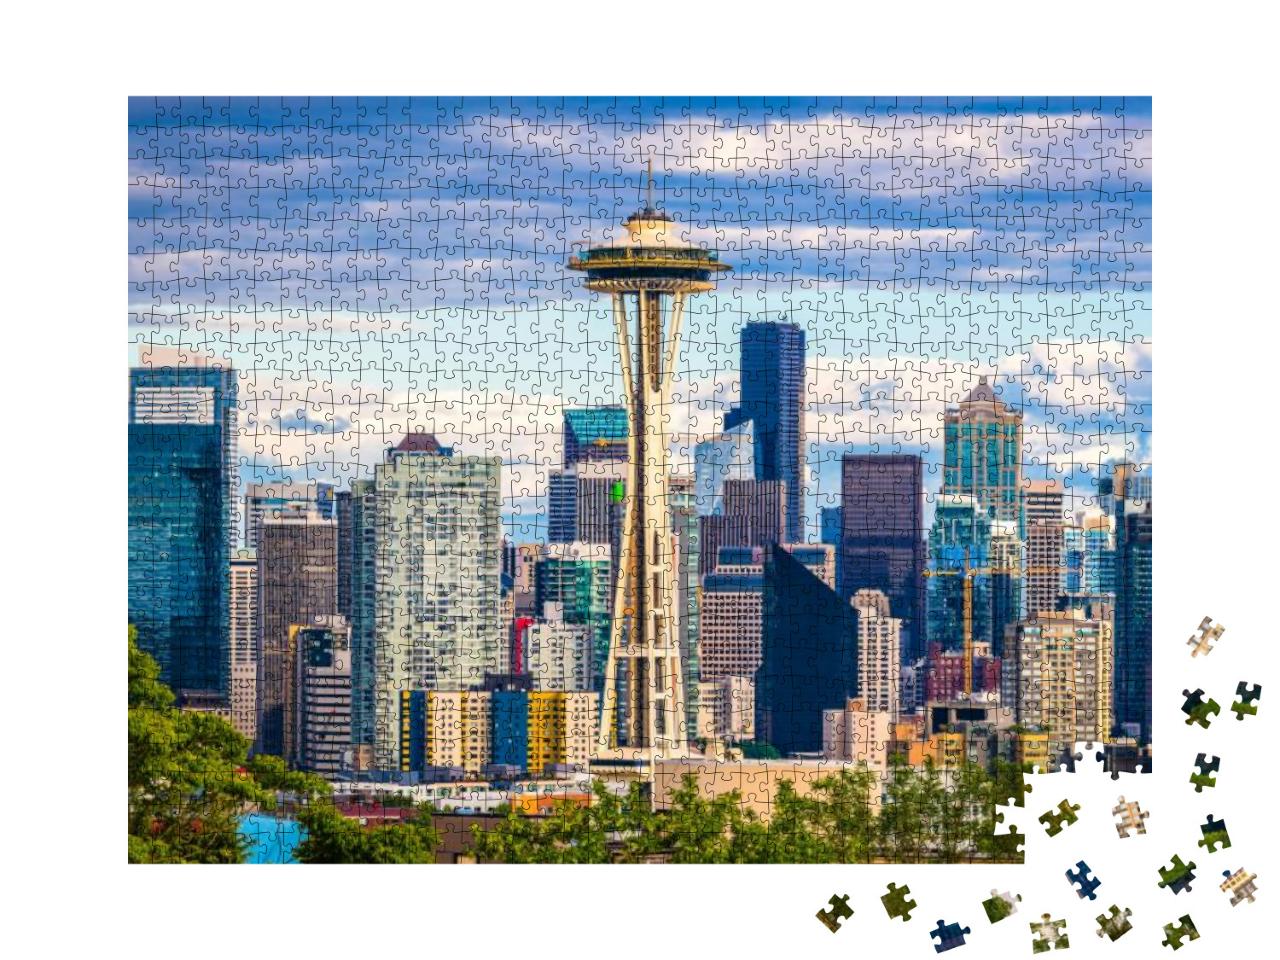 Seattle, Washington, USA Downtown Skyline... Jigsaw Puzzle with 1000 pieces